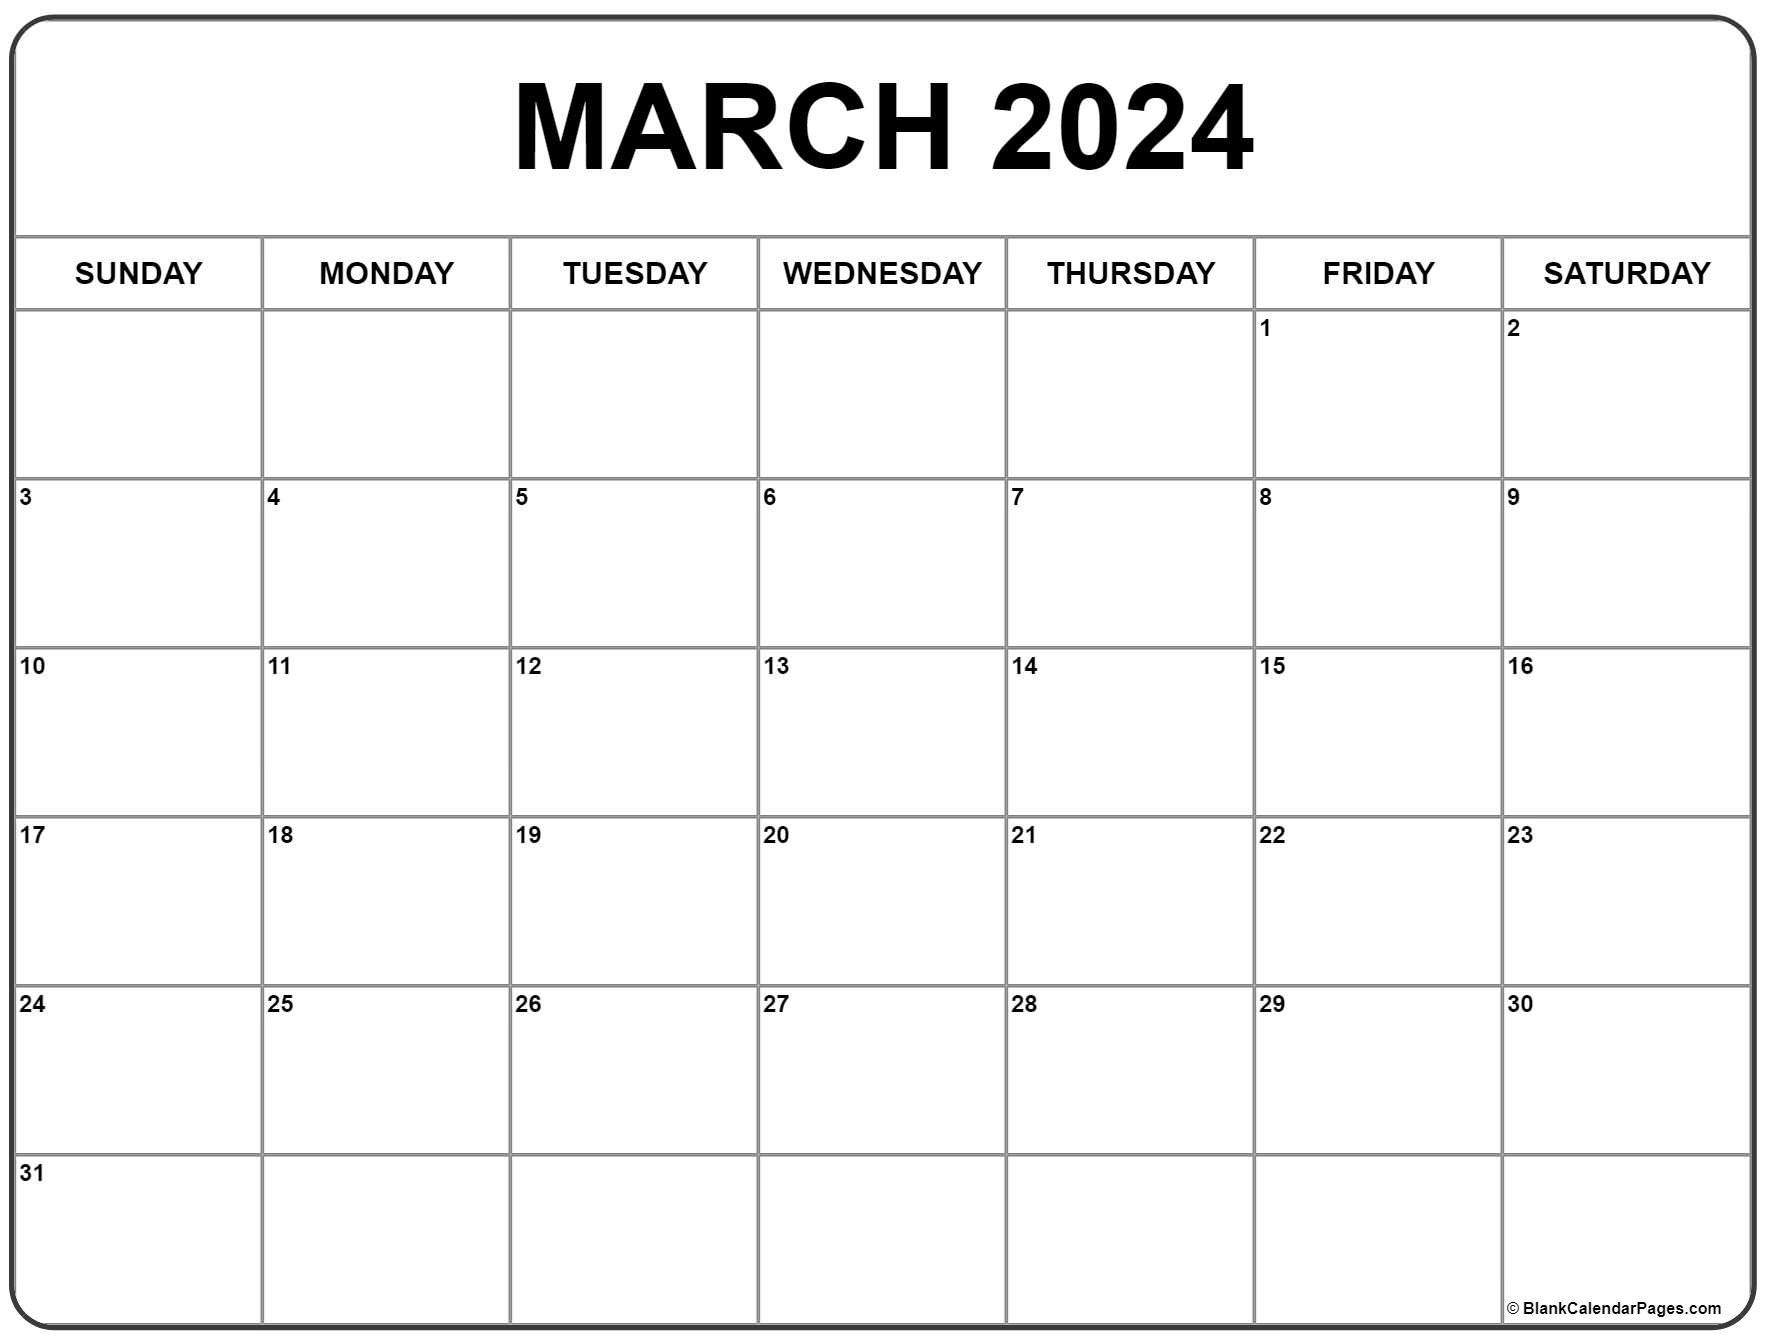 March 2024 Calendar | Free Printable Calendar in Free Printable Calendar 2024 No Downloads March